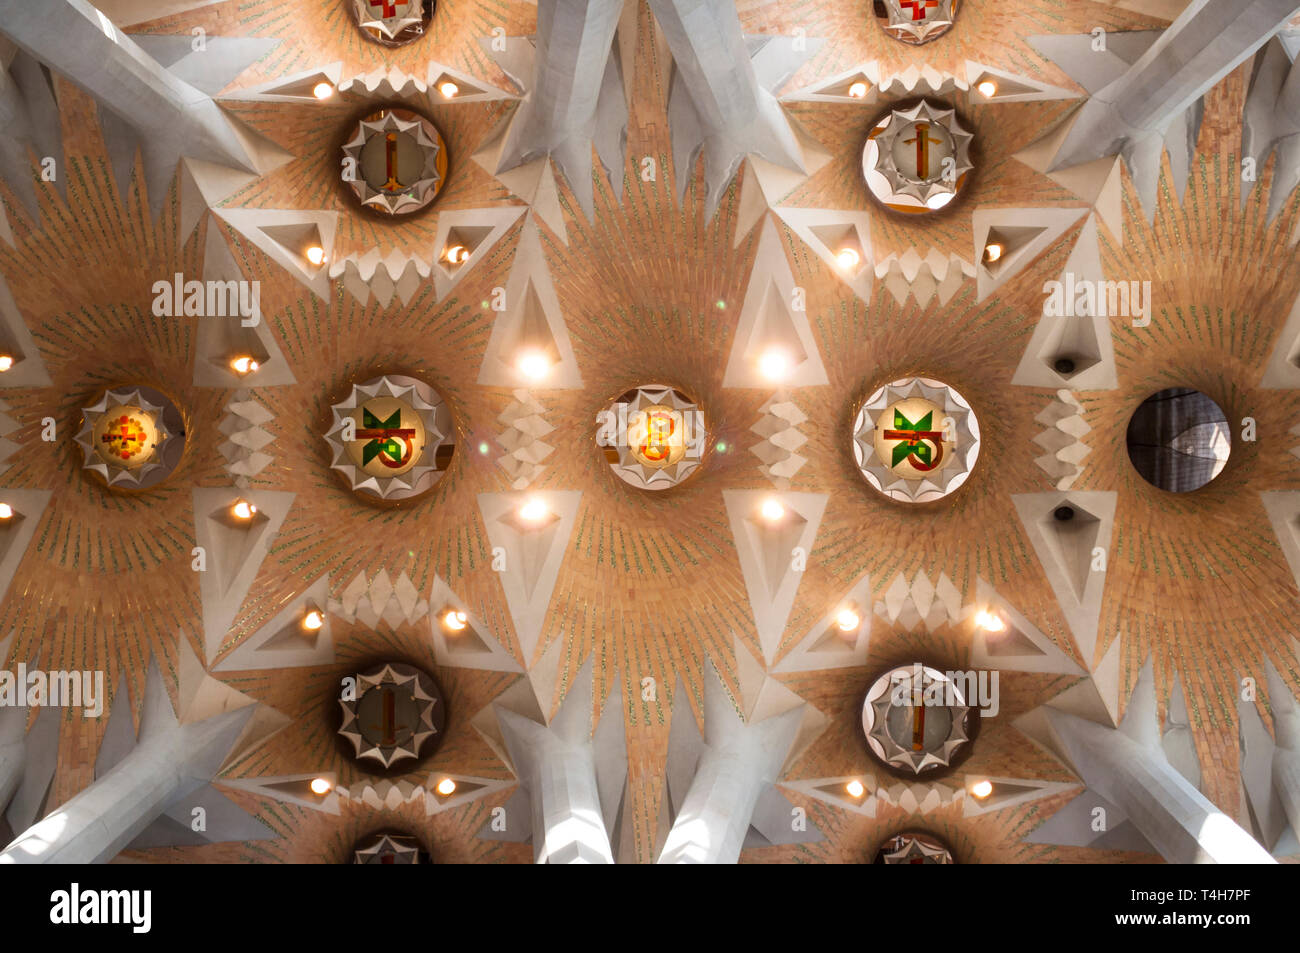 Ceiling of the interior of the expiatory temple of the Sagrada Familia, designed by the architect Antoni Gaudi, Barcelona, Catalonia, Spain Stock Photo